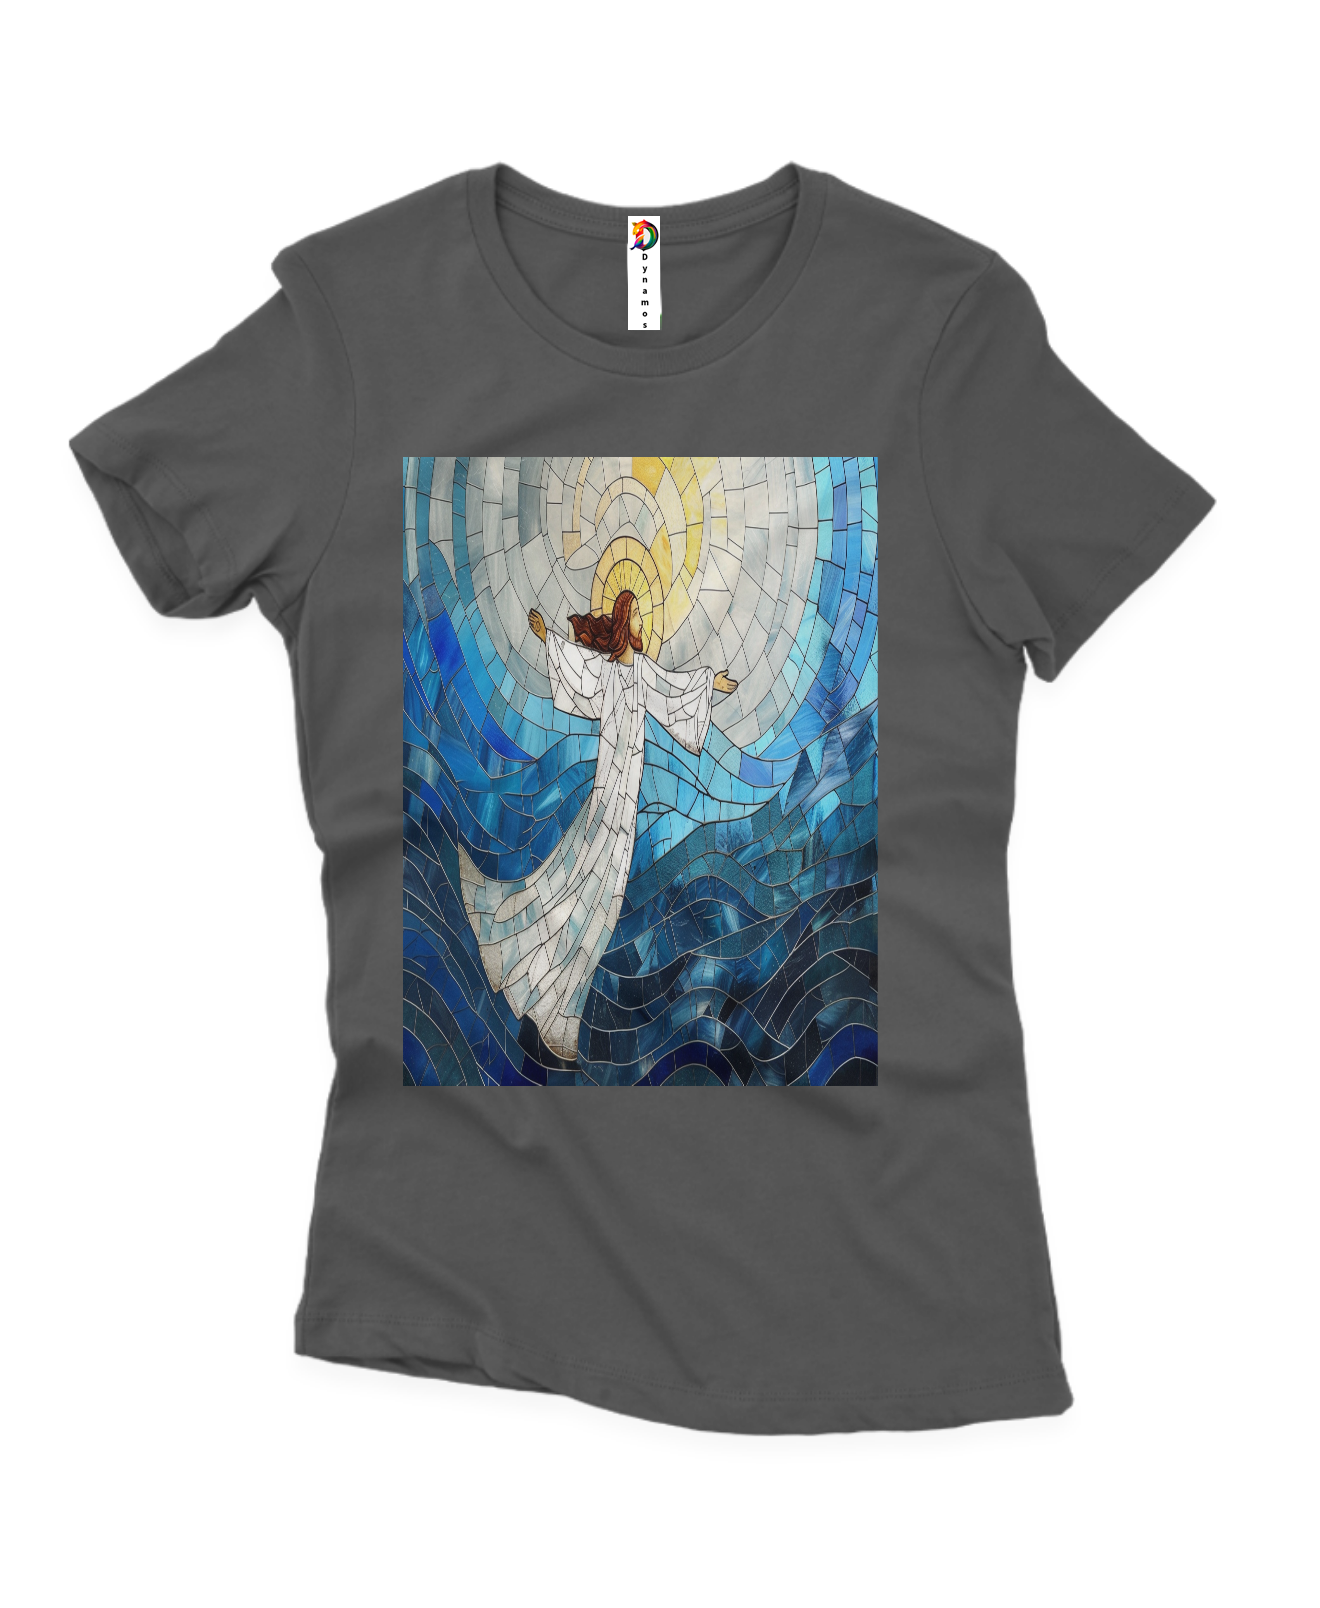 Camiseta Elenilde Masc - Jesus - Algodão Pima